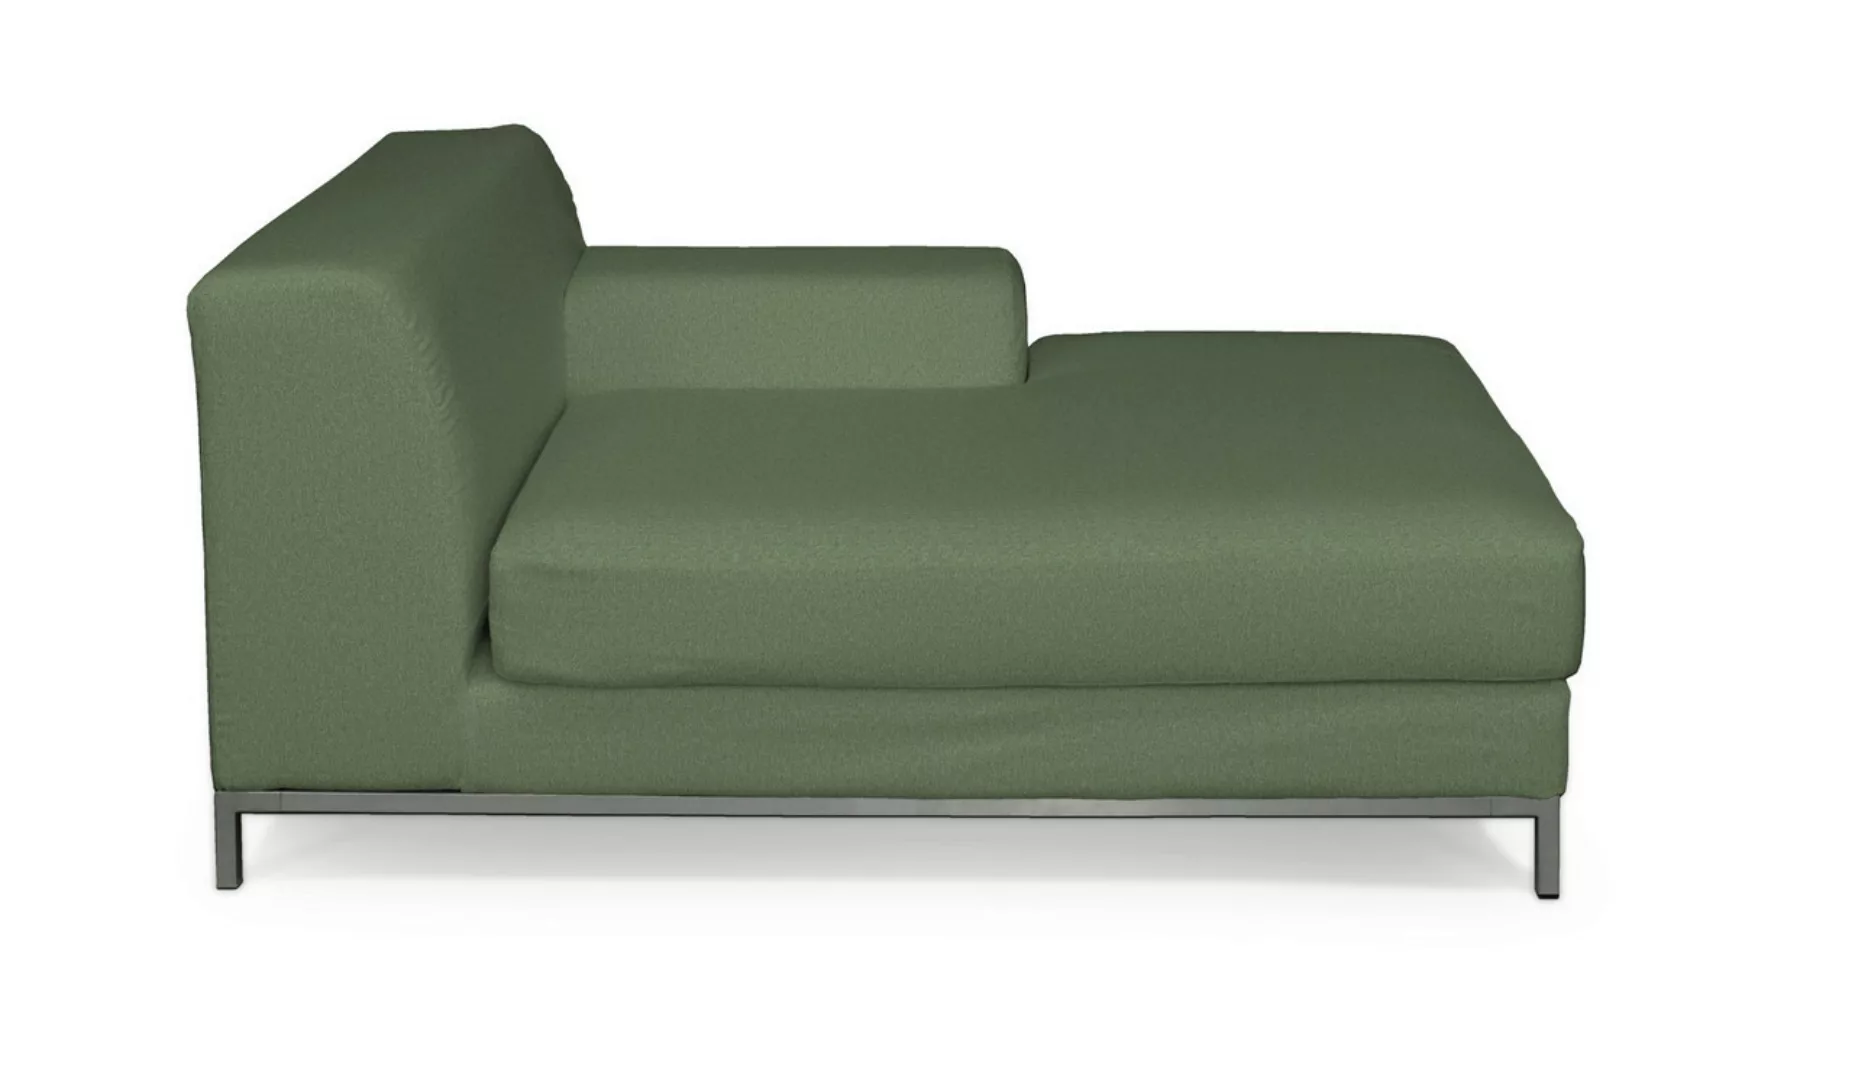 Bezug für Kramfors Sofa Recamiere rechts, grün, Bezug für Recamiere rechts günstig online kaufen